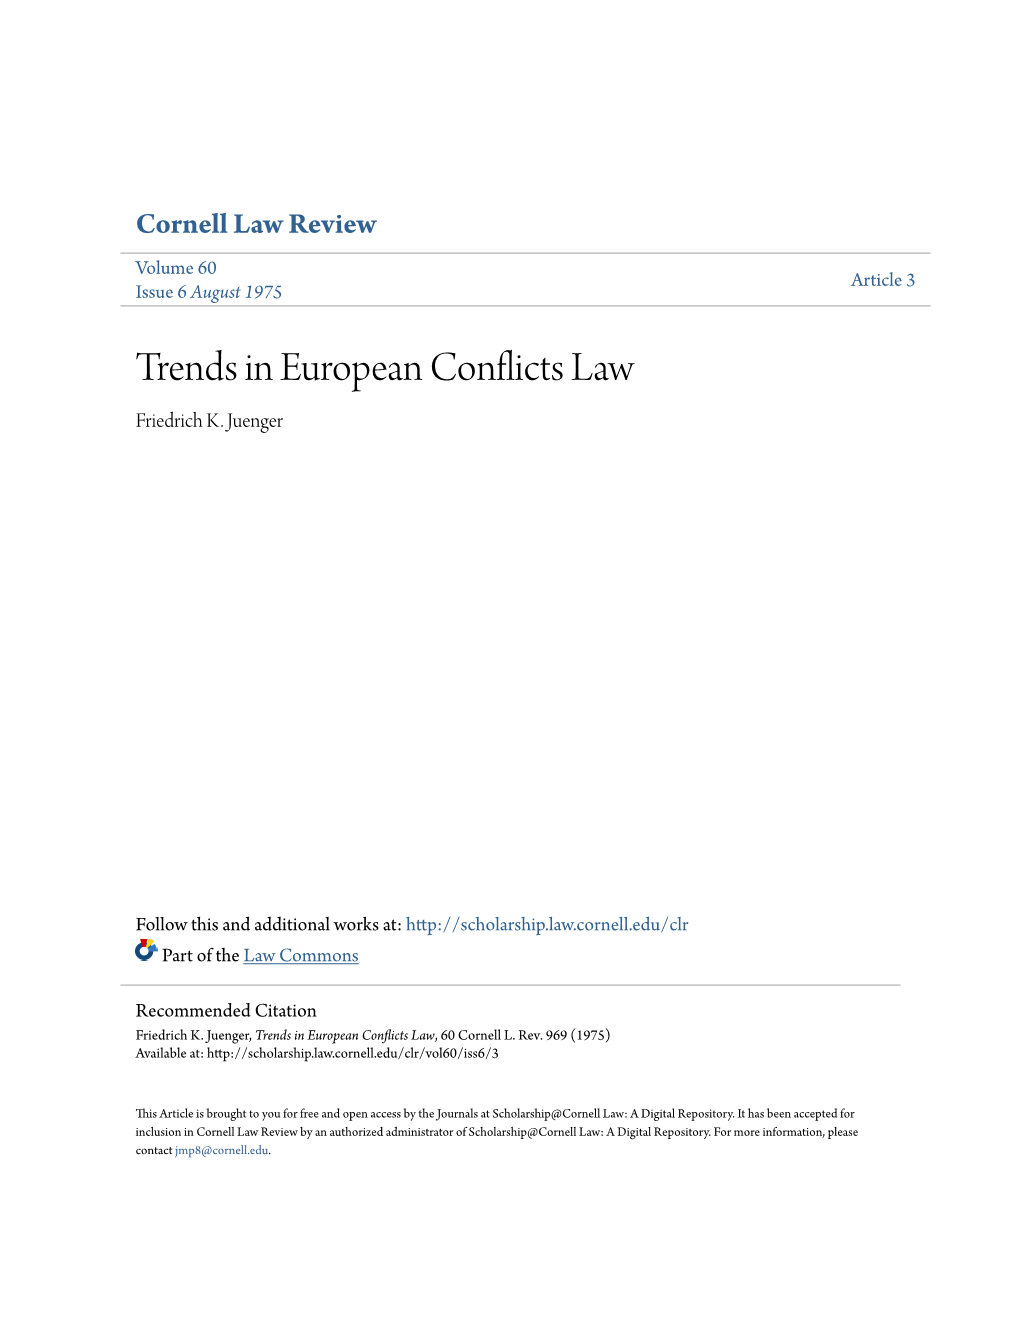 Trends in European Conflicts Law Friedrich K